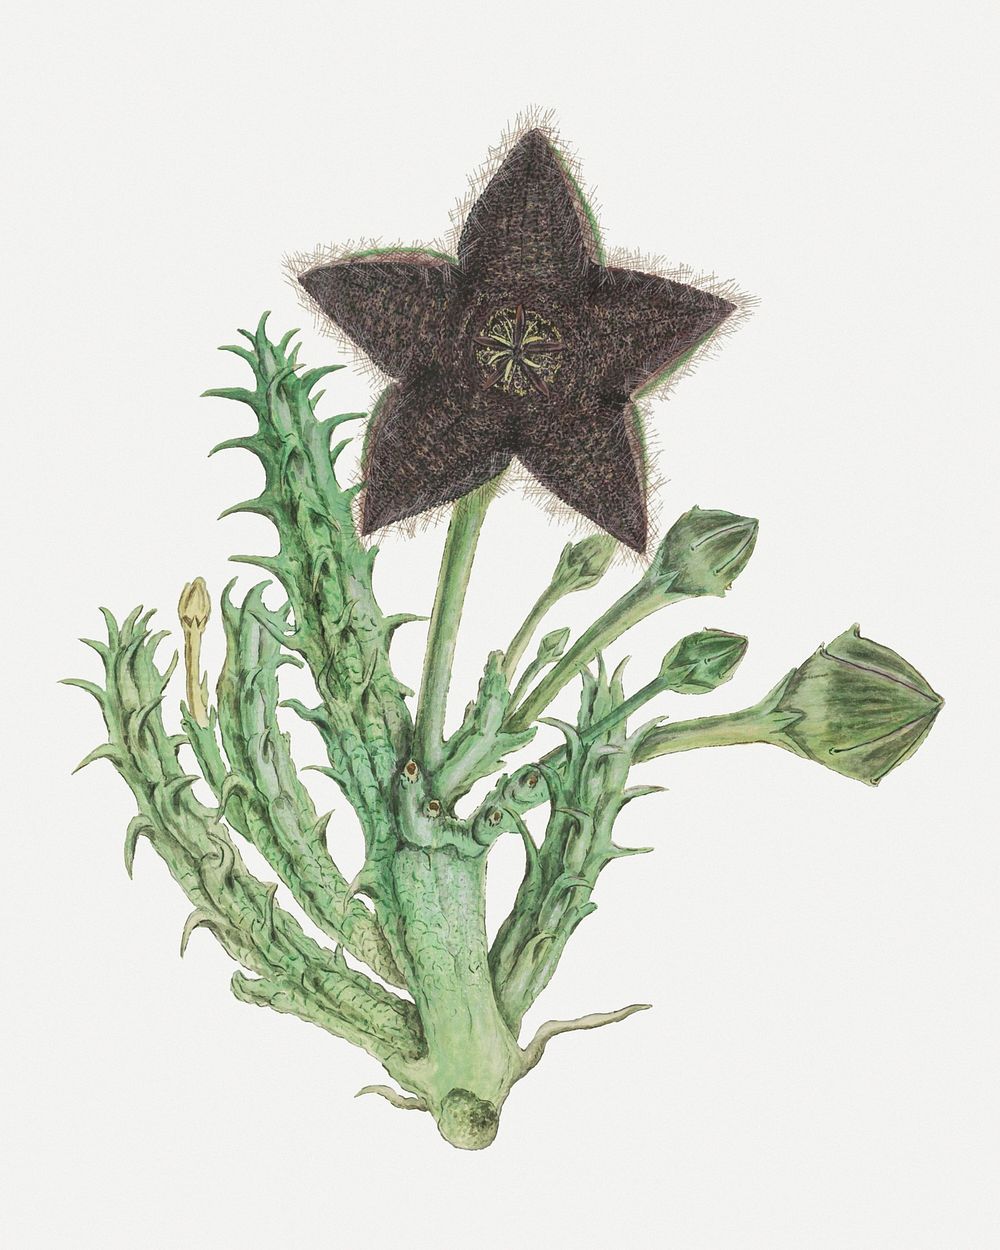 Tridentea gemmiflora psd vintage flower illustration set, remixed from the artworks by Robert Jacob Gordon